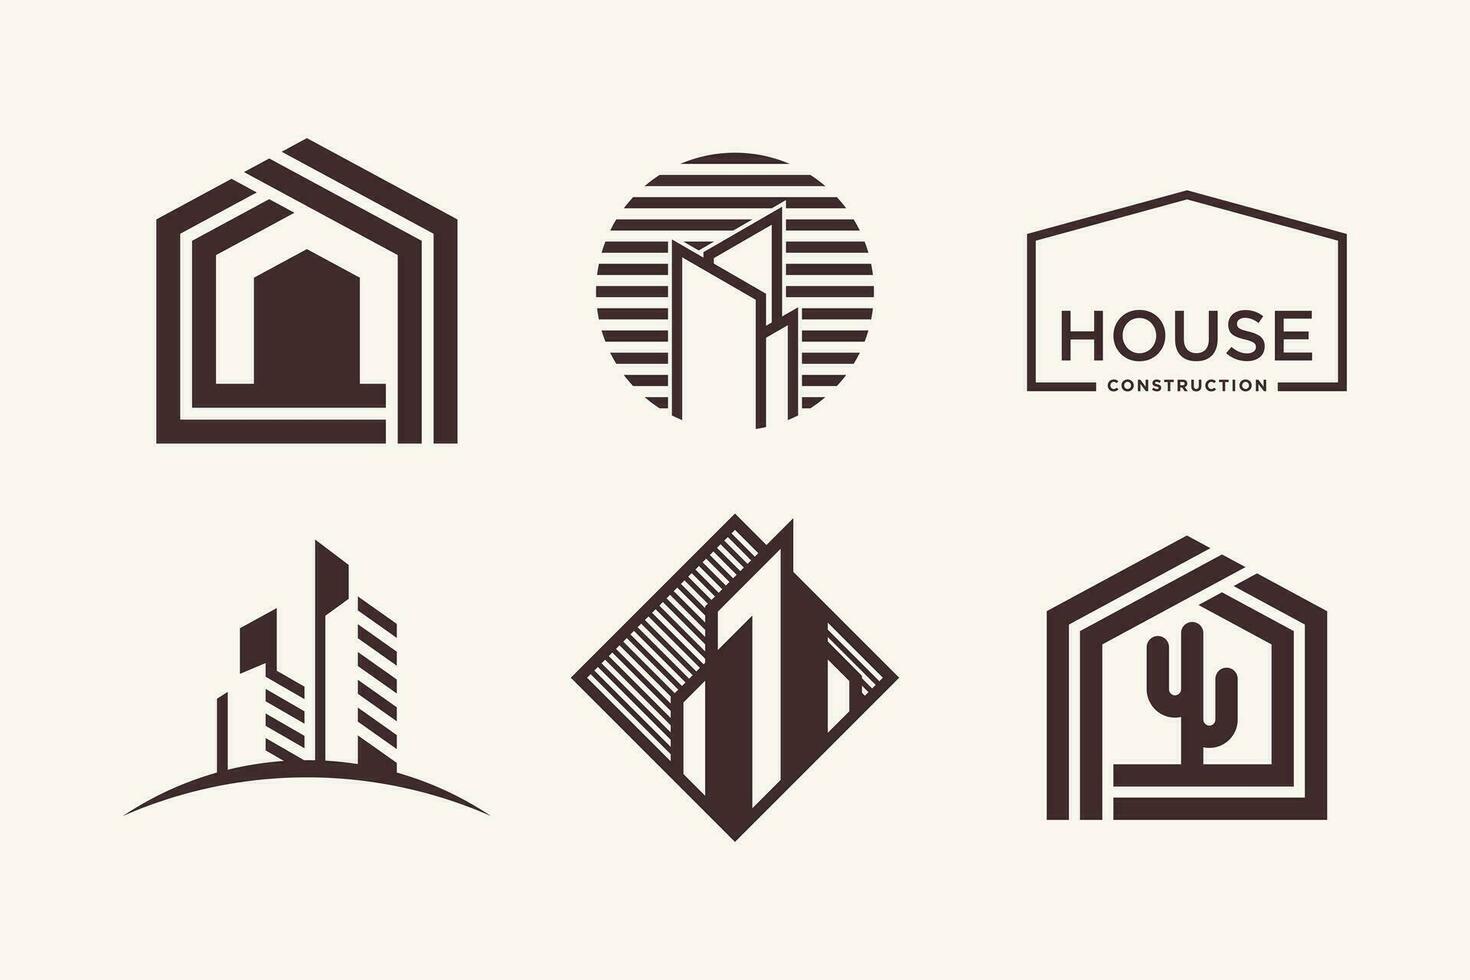 Set of real estate logo design element vector icon with creative idea